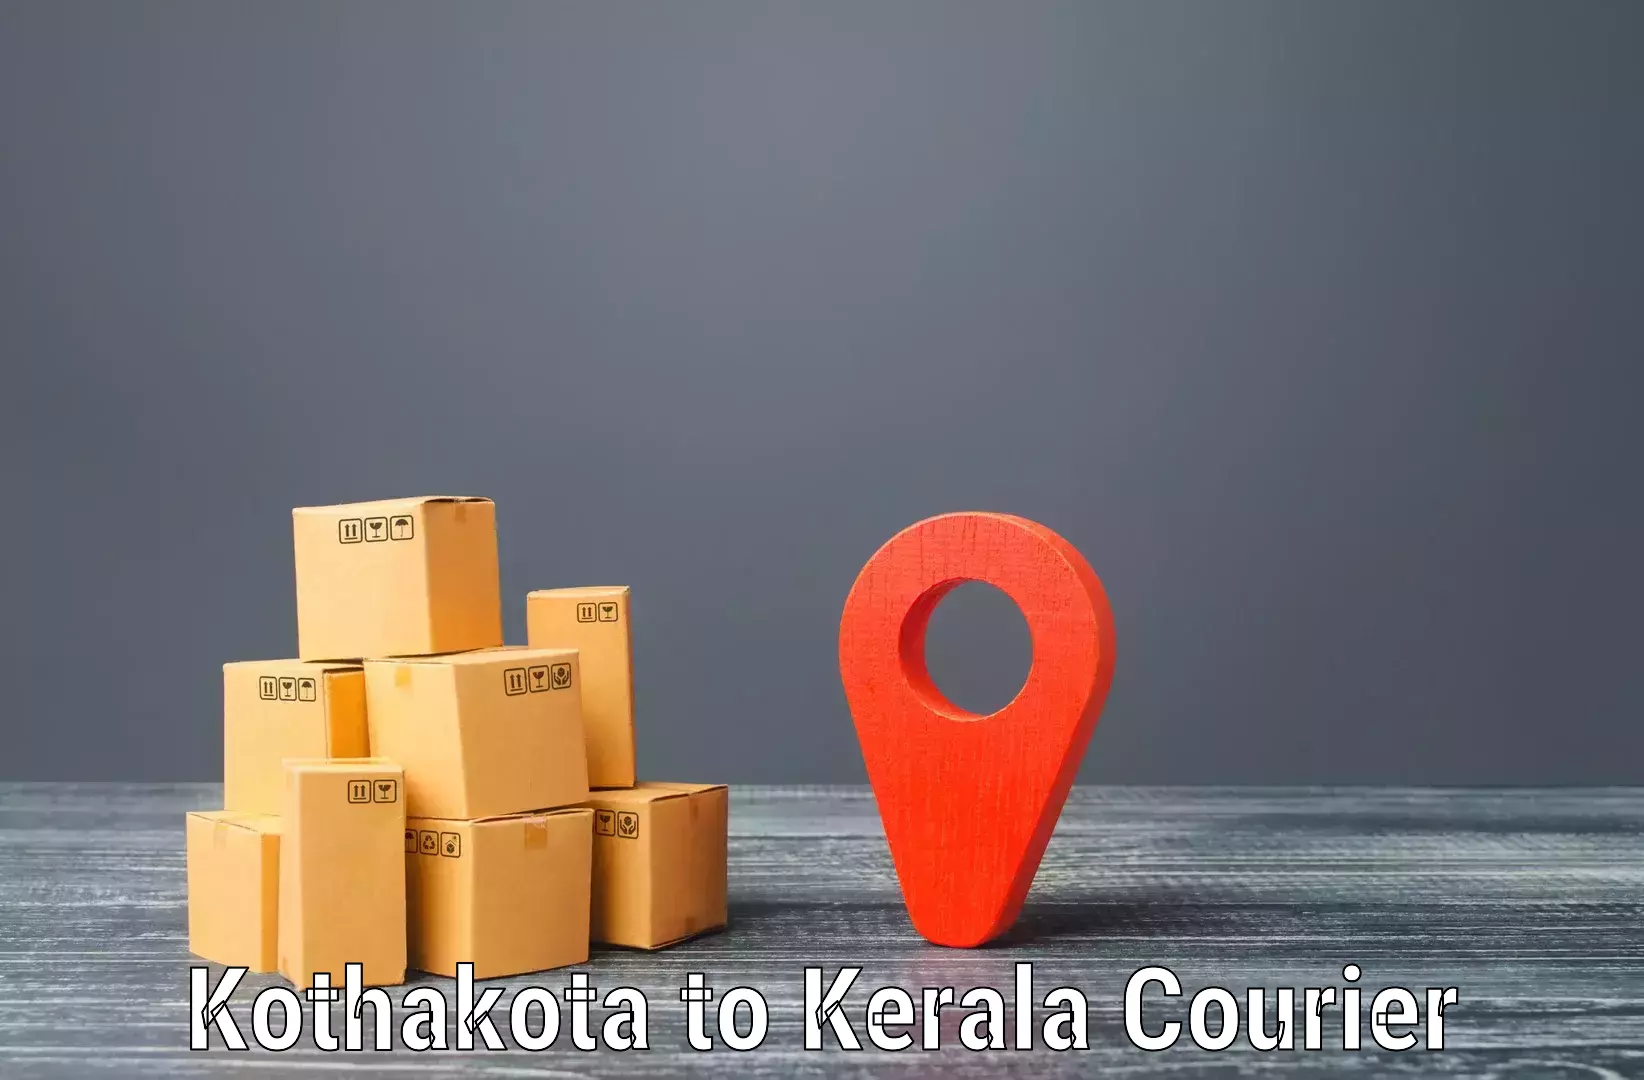 Global freight services Kothakota to Cochin Port Kochi